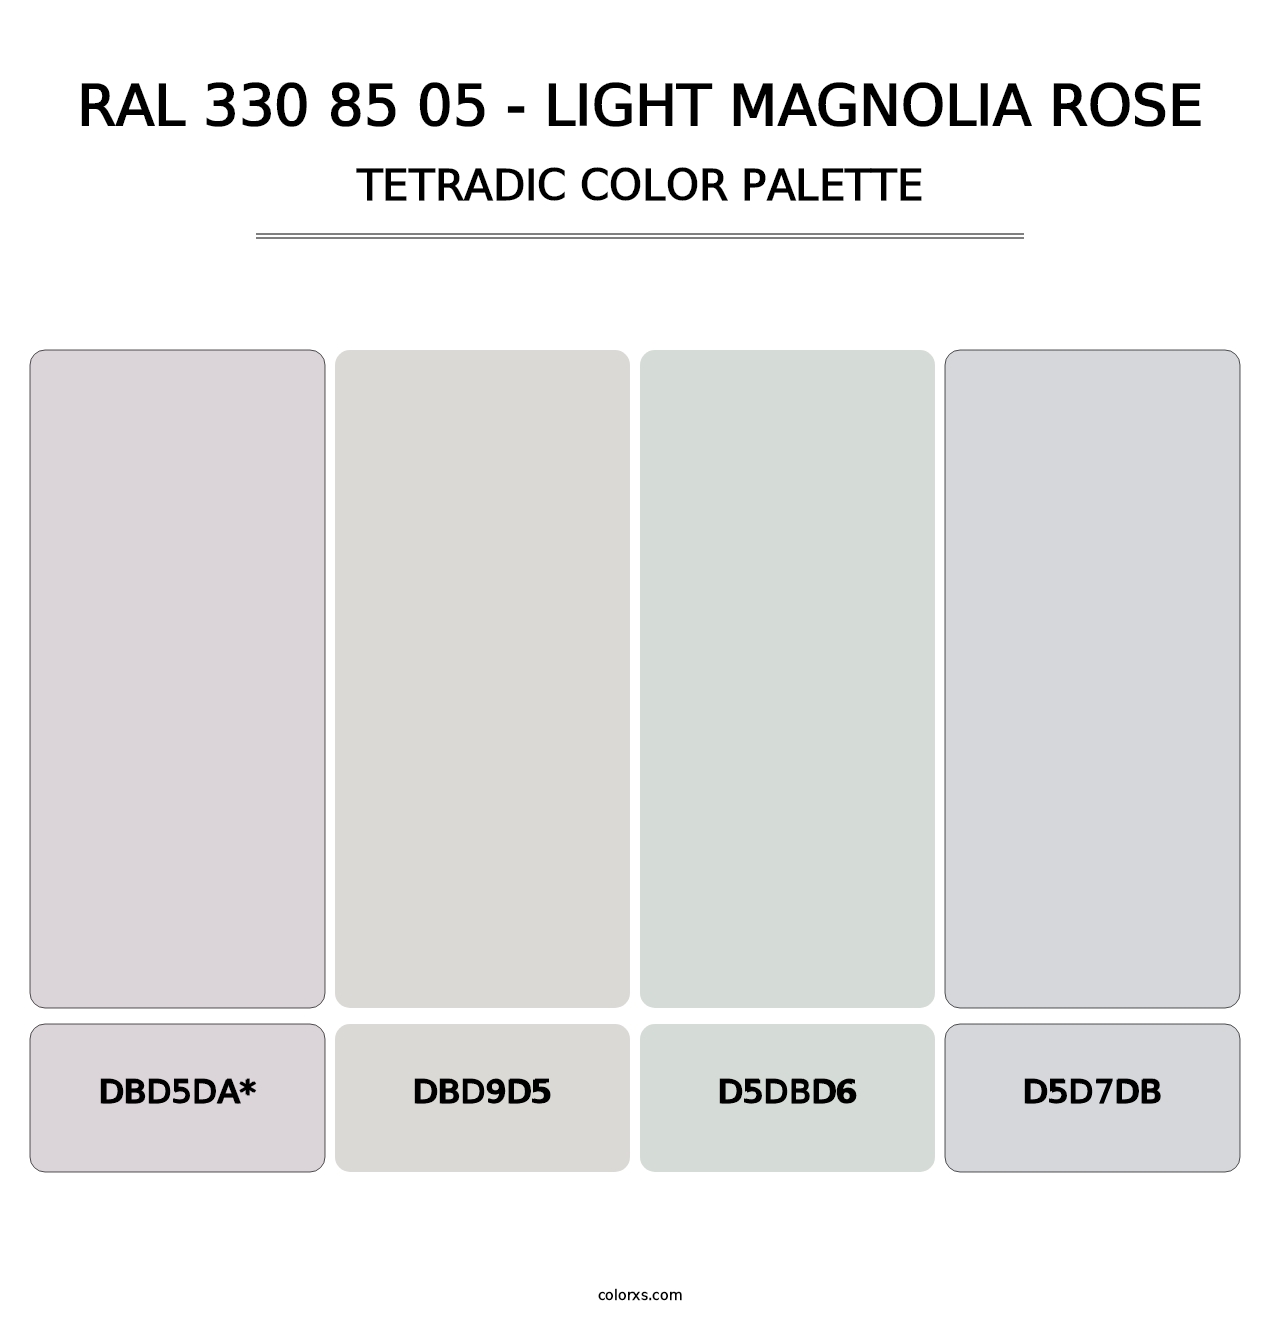 RAL 330 85 05 - Light Magnolia Rose - Tetradic Color Palette